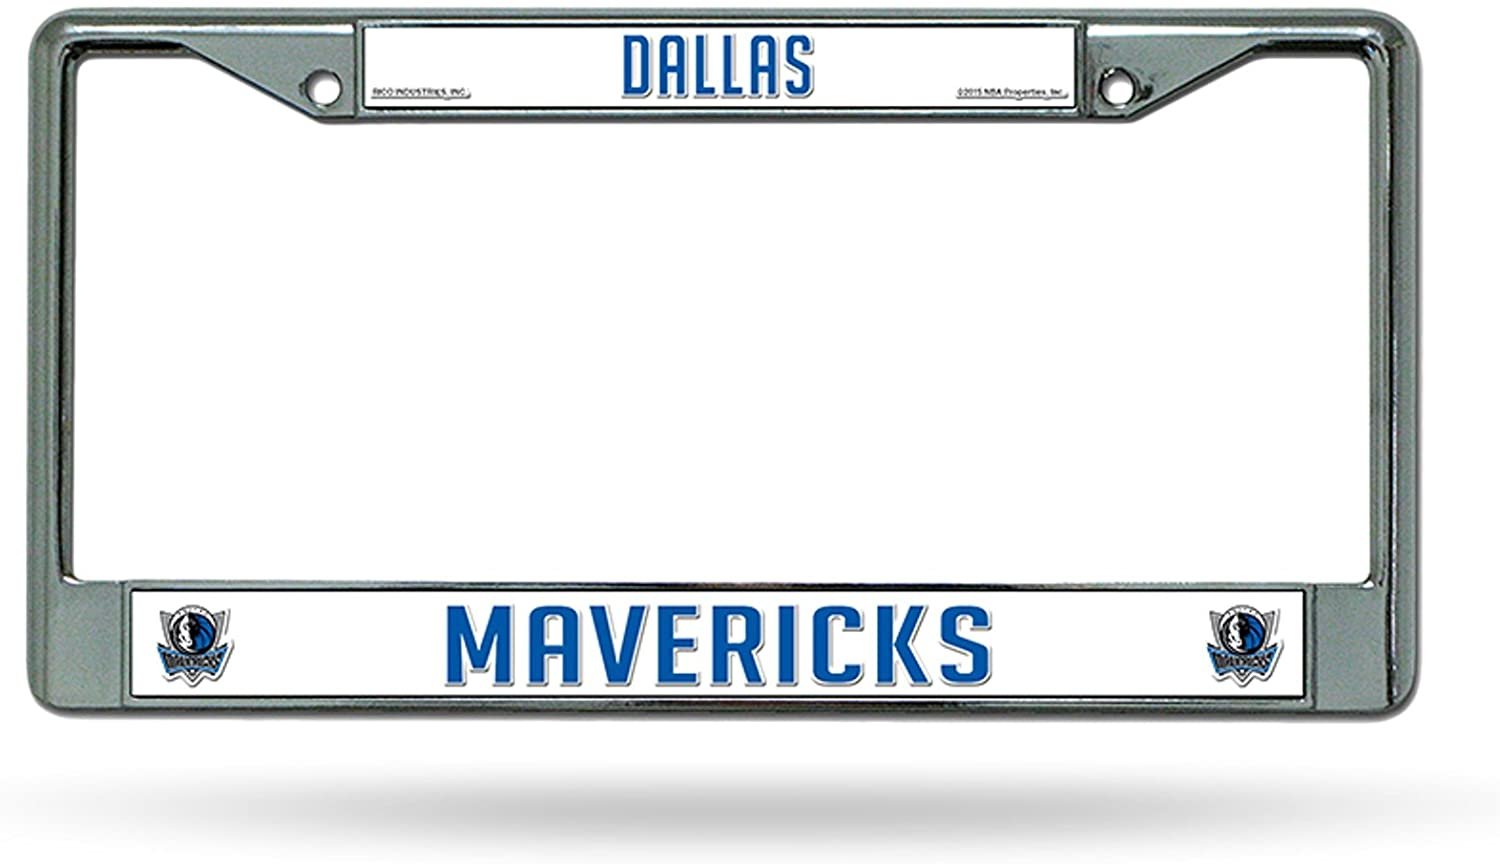 Dallas Mavericks Premium Metal License Plate Frame Chrome Tag Cover, 12x6 Inch